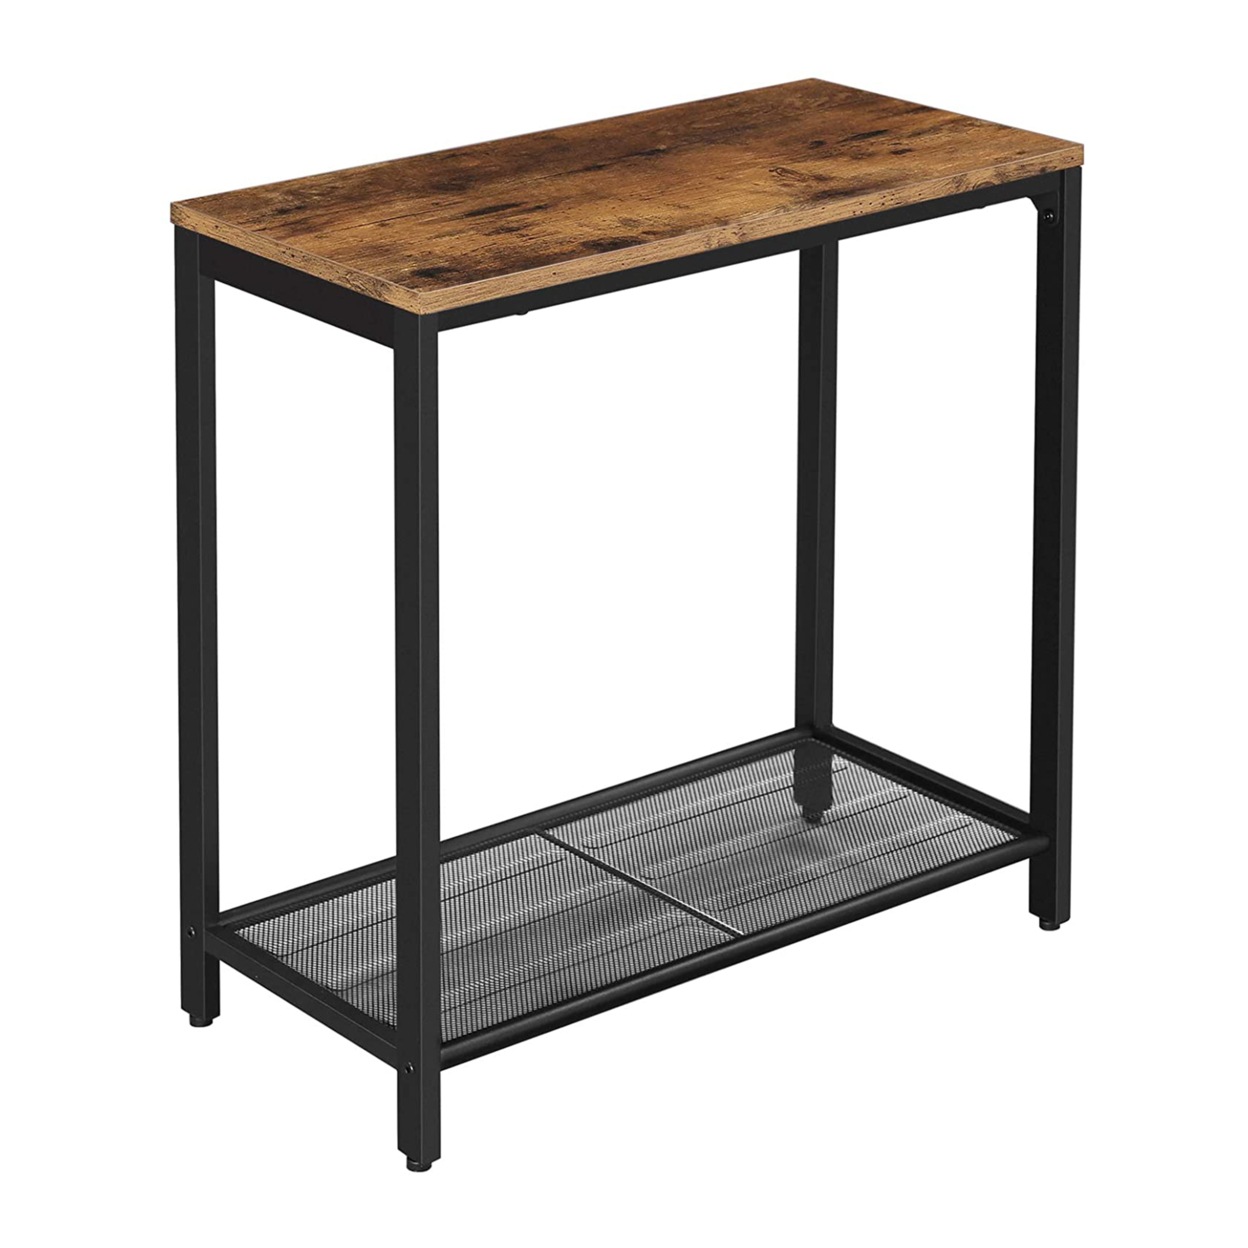 24 Inch Industrial End Table, Wood, Metal Frame, Mesh Shelf, Brown, Black- Saltoro Sherpi